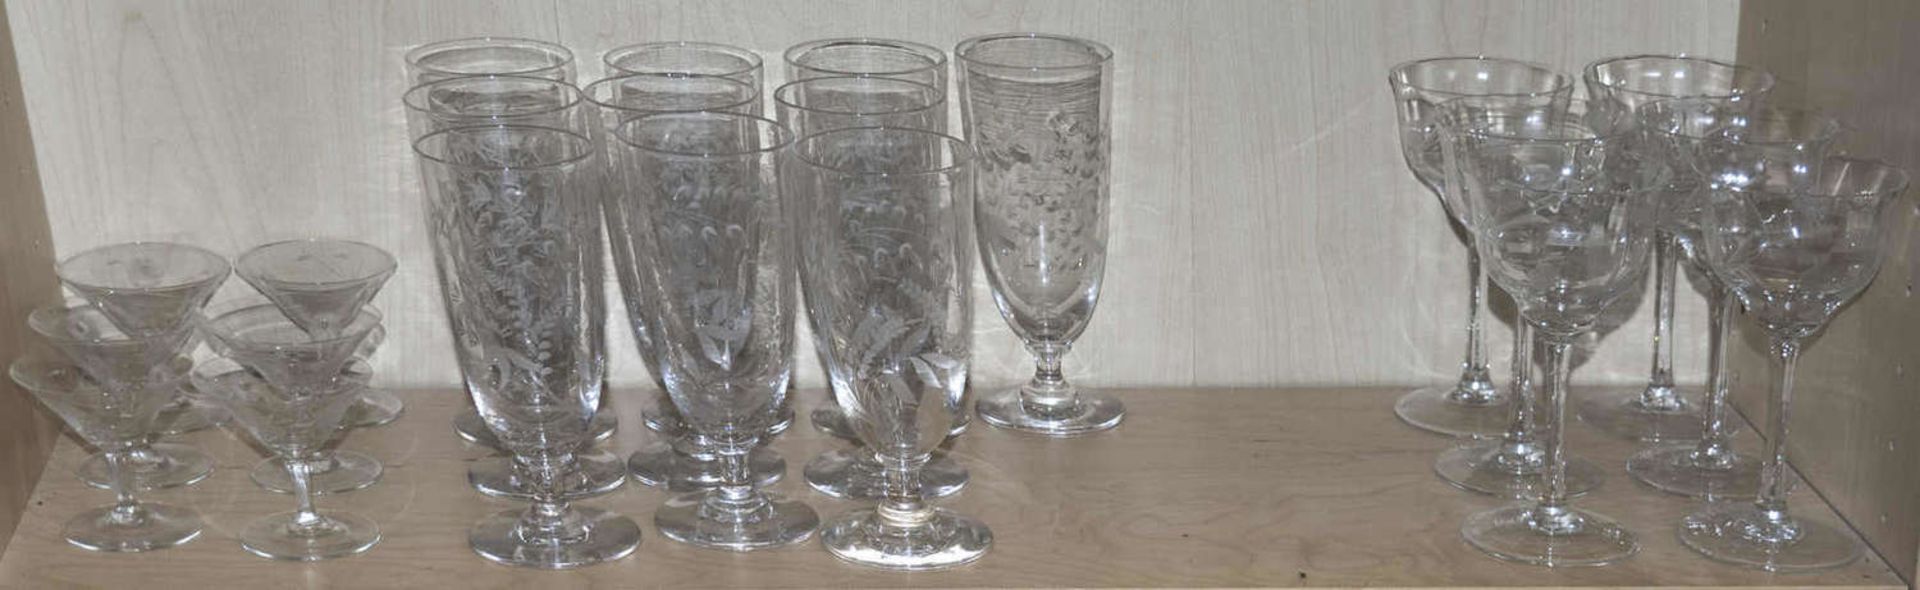 Lot alte Gläser, dabei 6 Likörgläser, 6 Weingläser, sowie 10 Biergläser. Guter Zustand.Lot of old